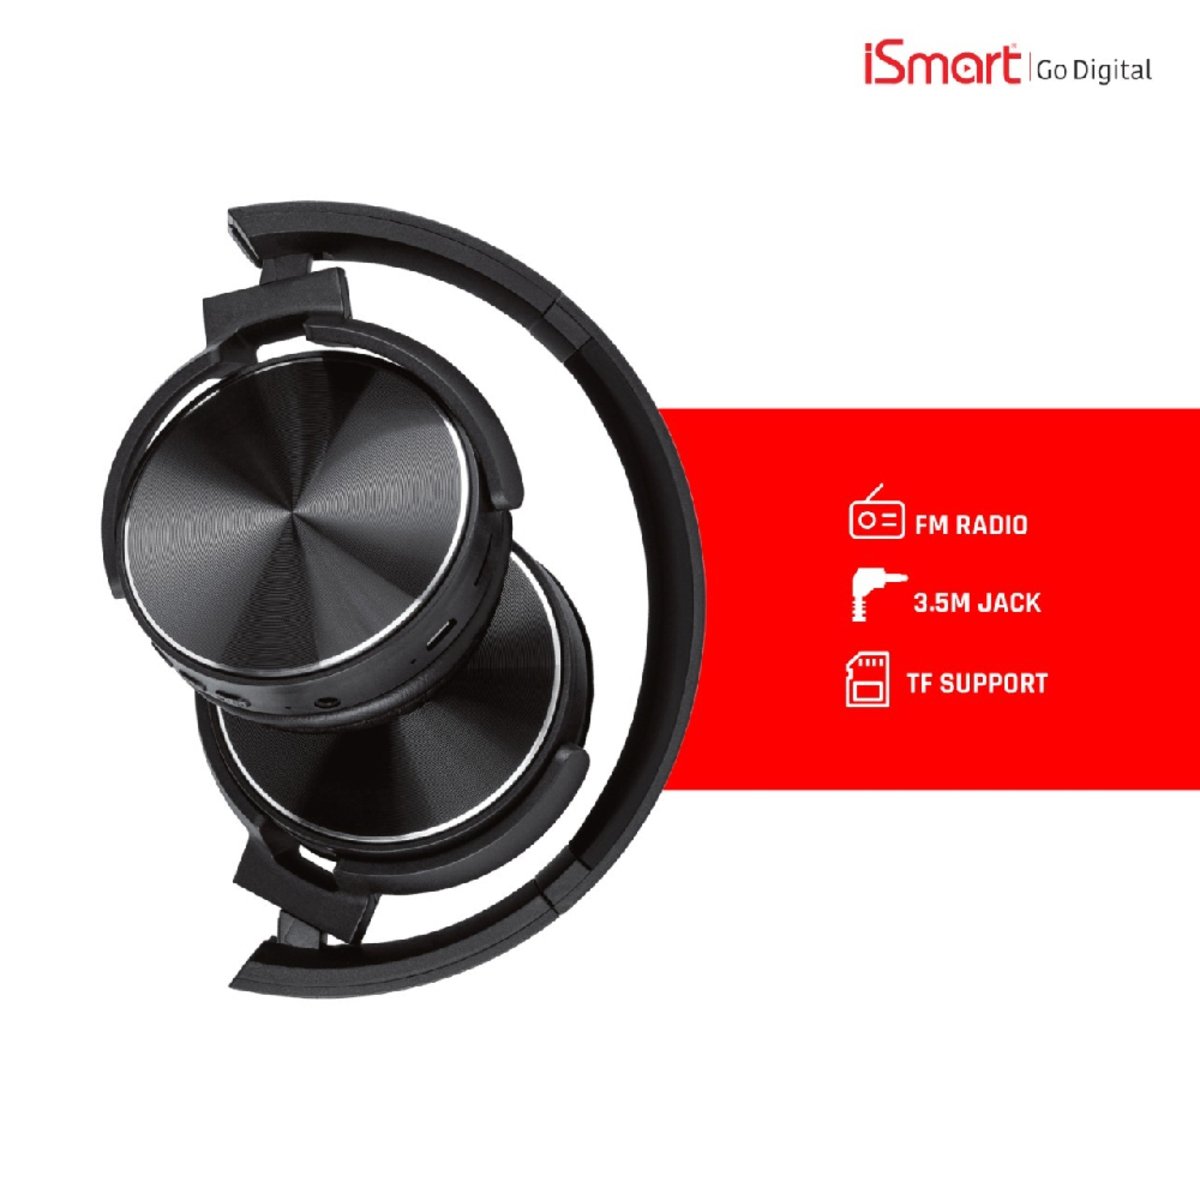 Ismart Foldable Wireless Stereo Headset BX3 Black